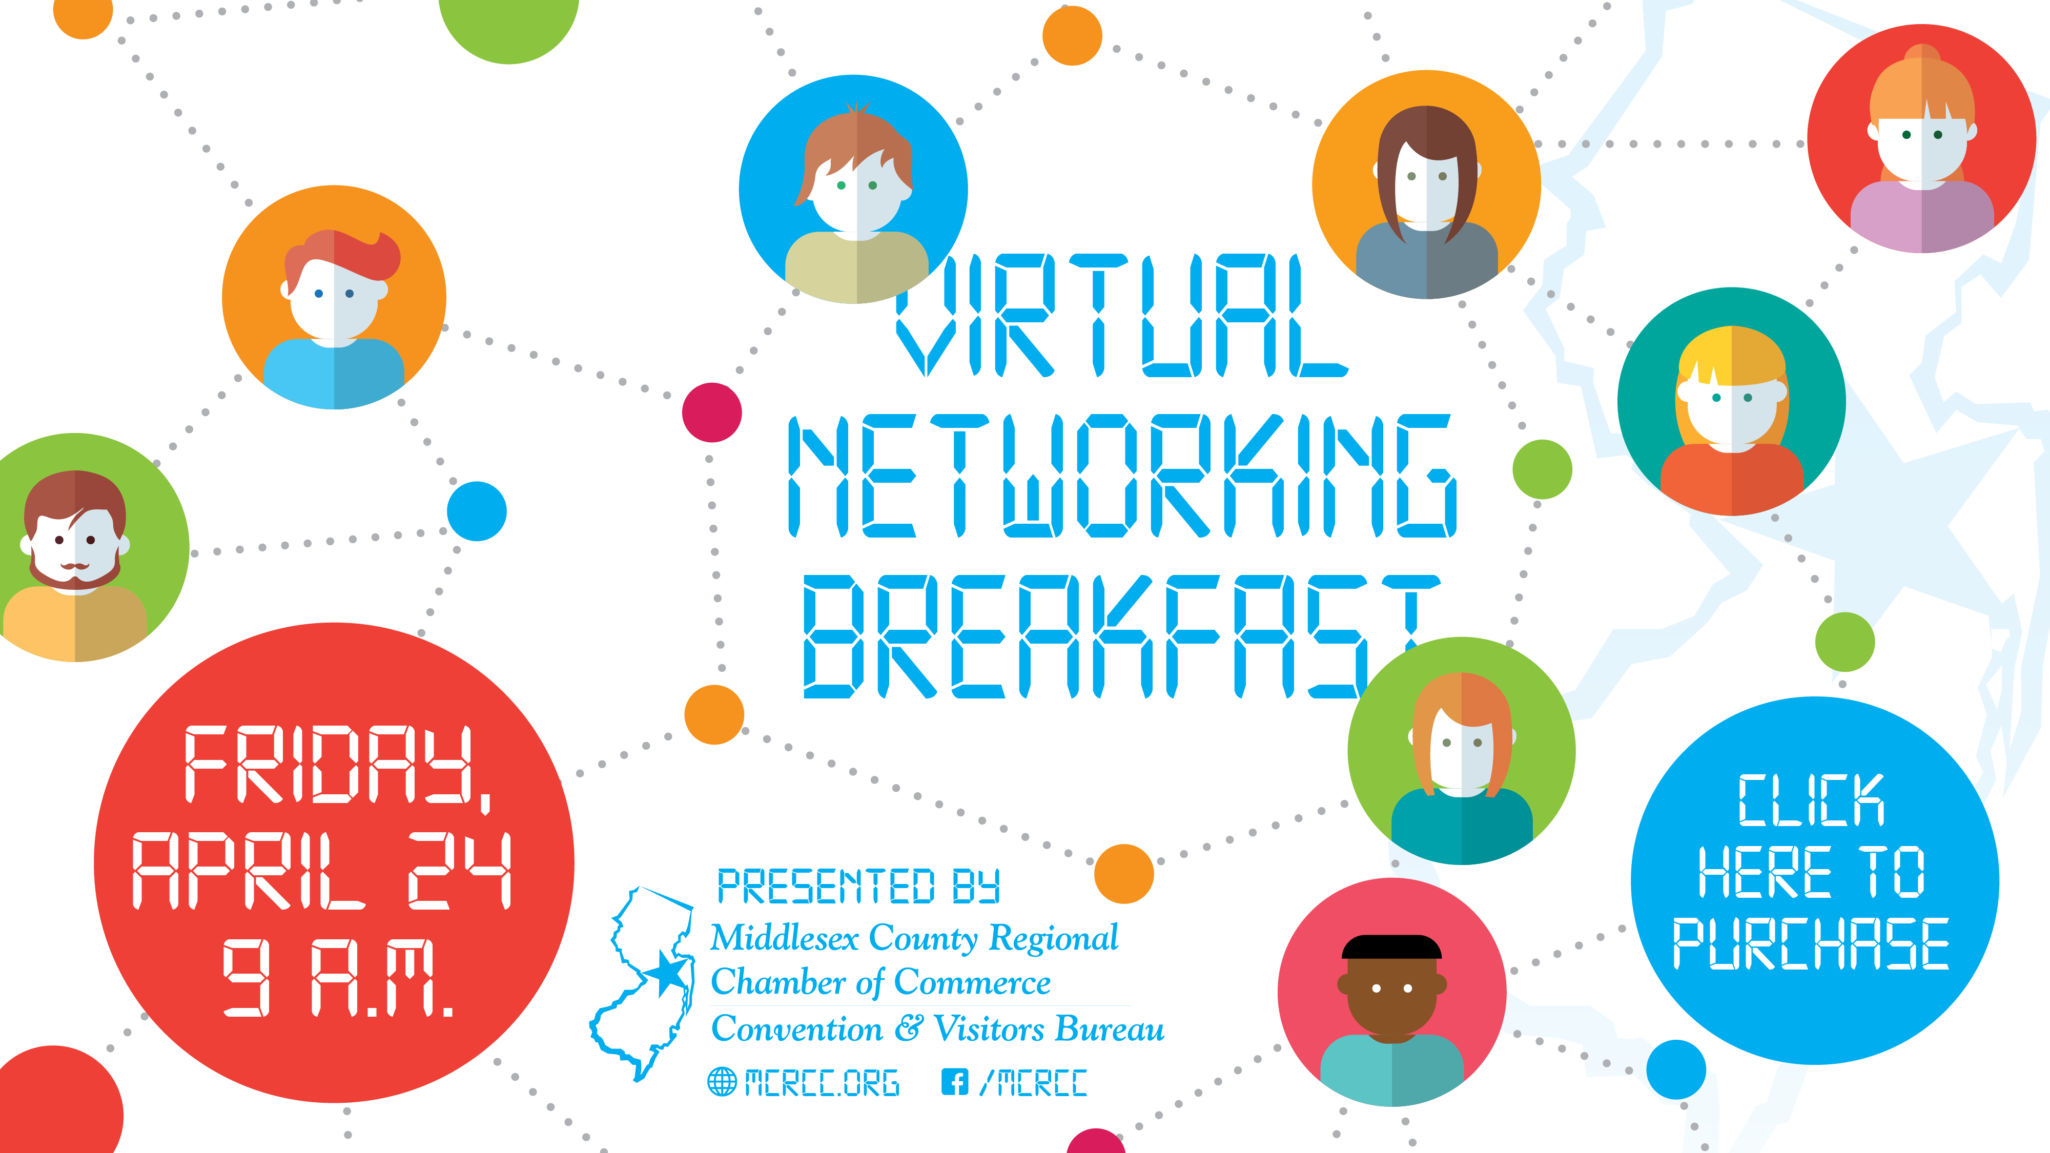 April 24th Virtual Networking Breakfast